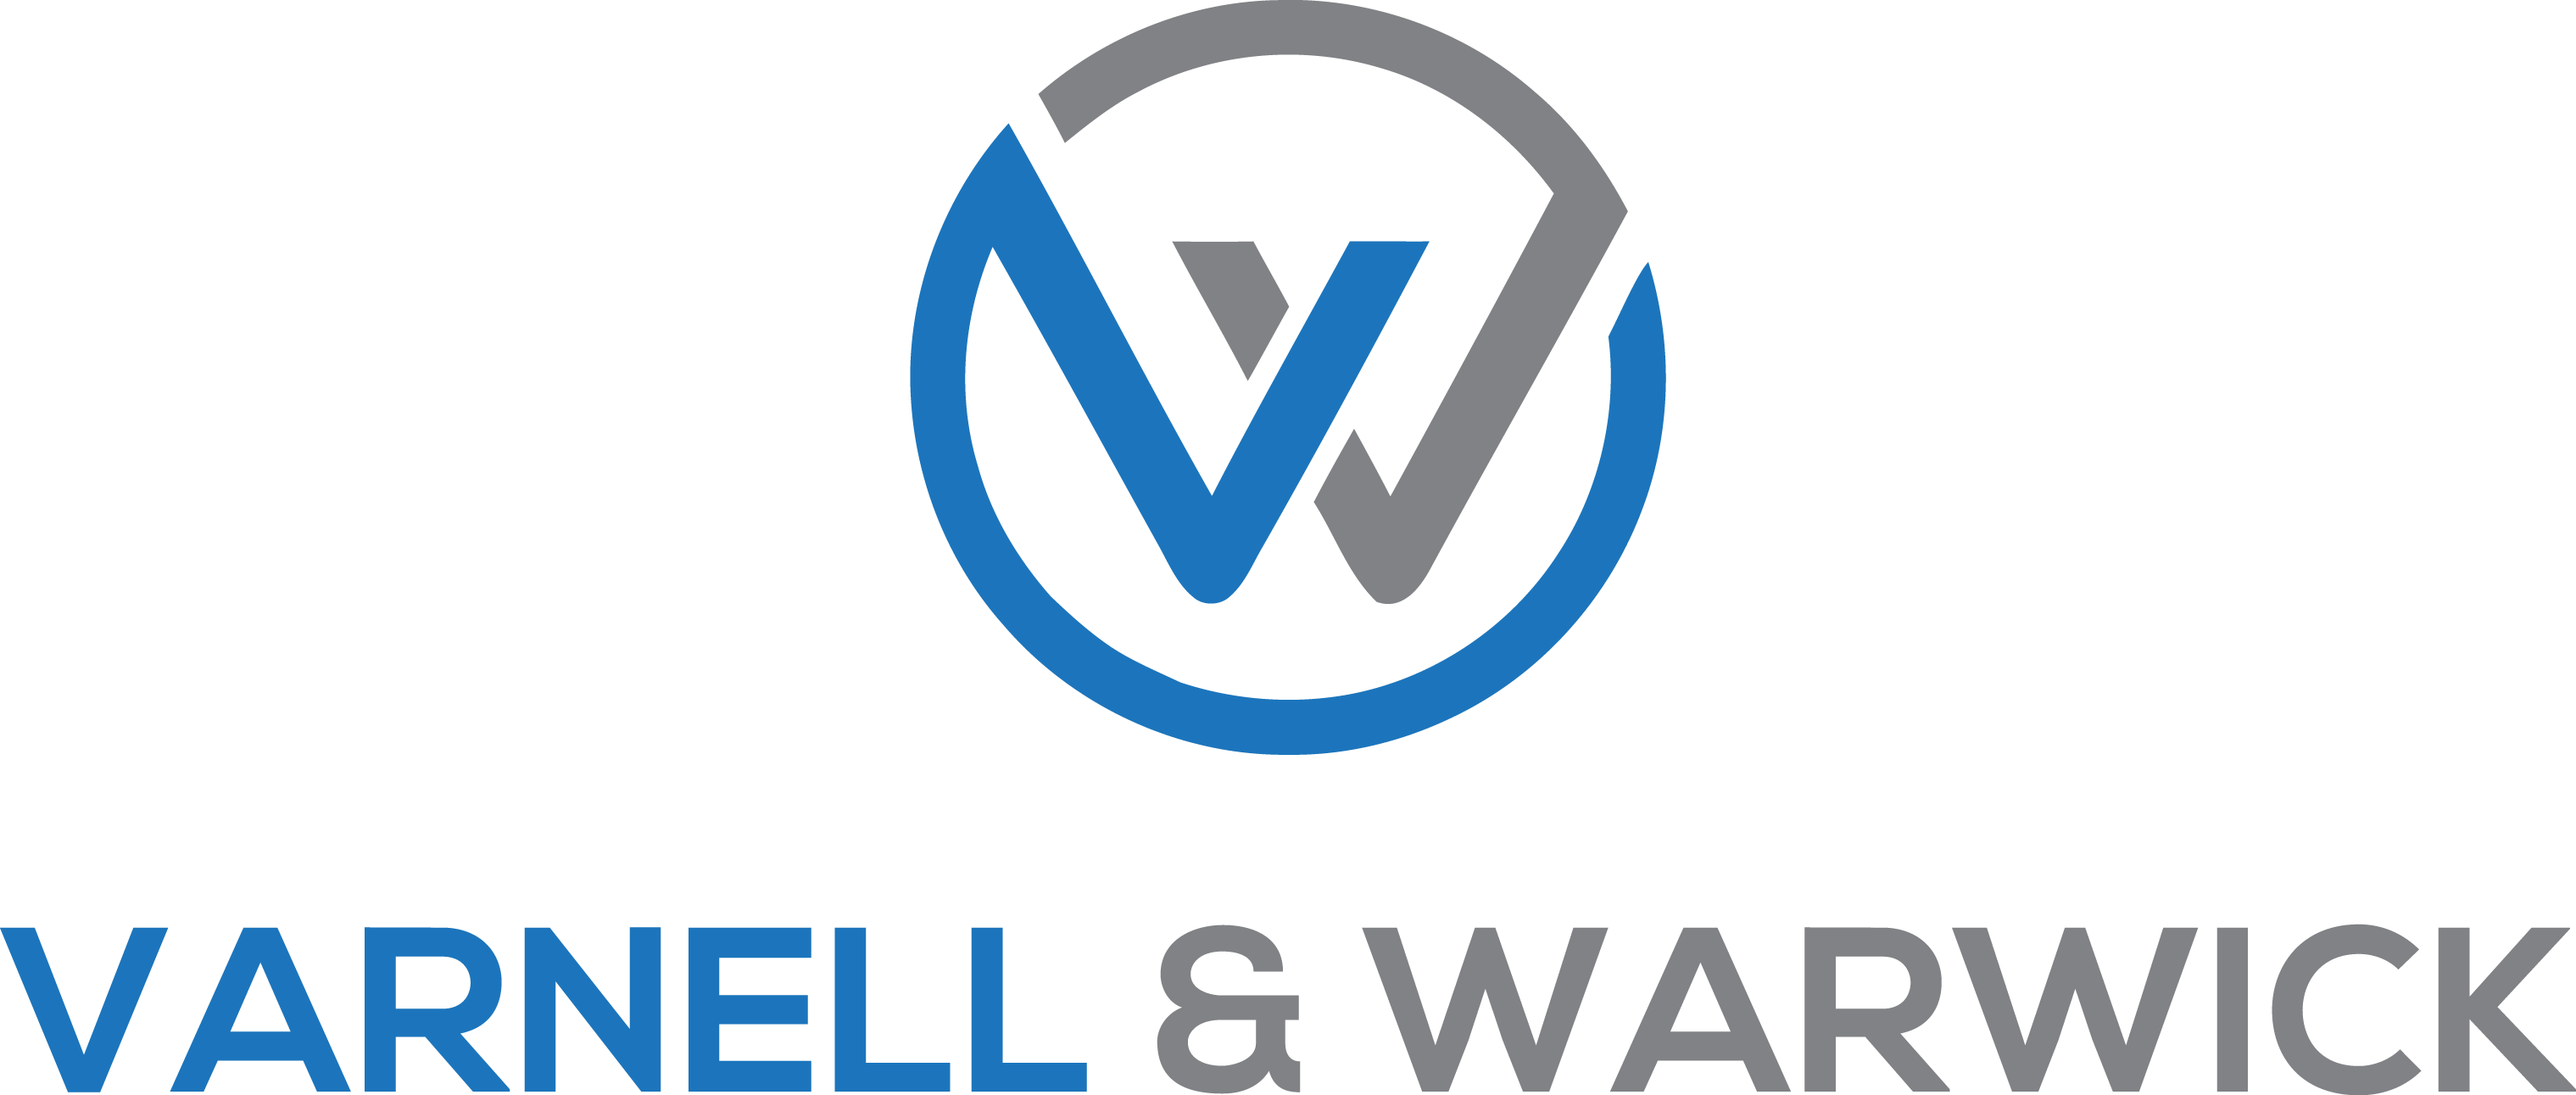 Varnell-Warwick-logo.png